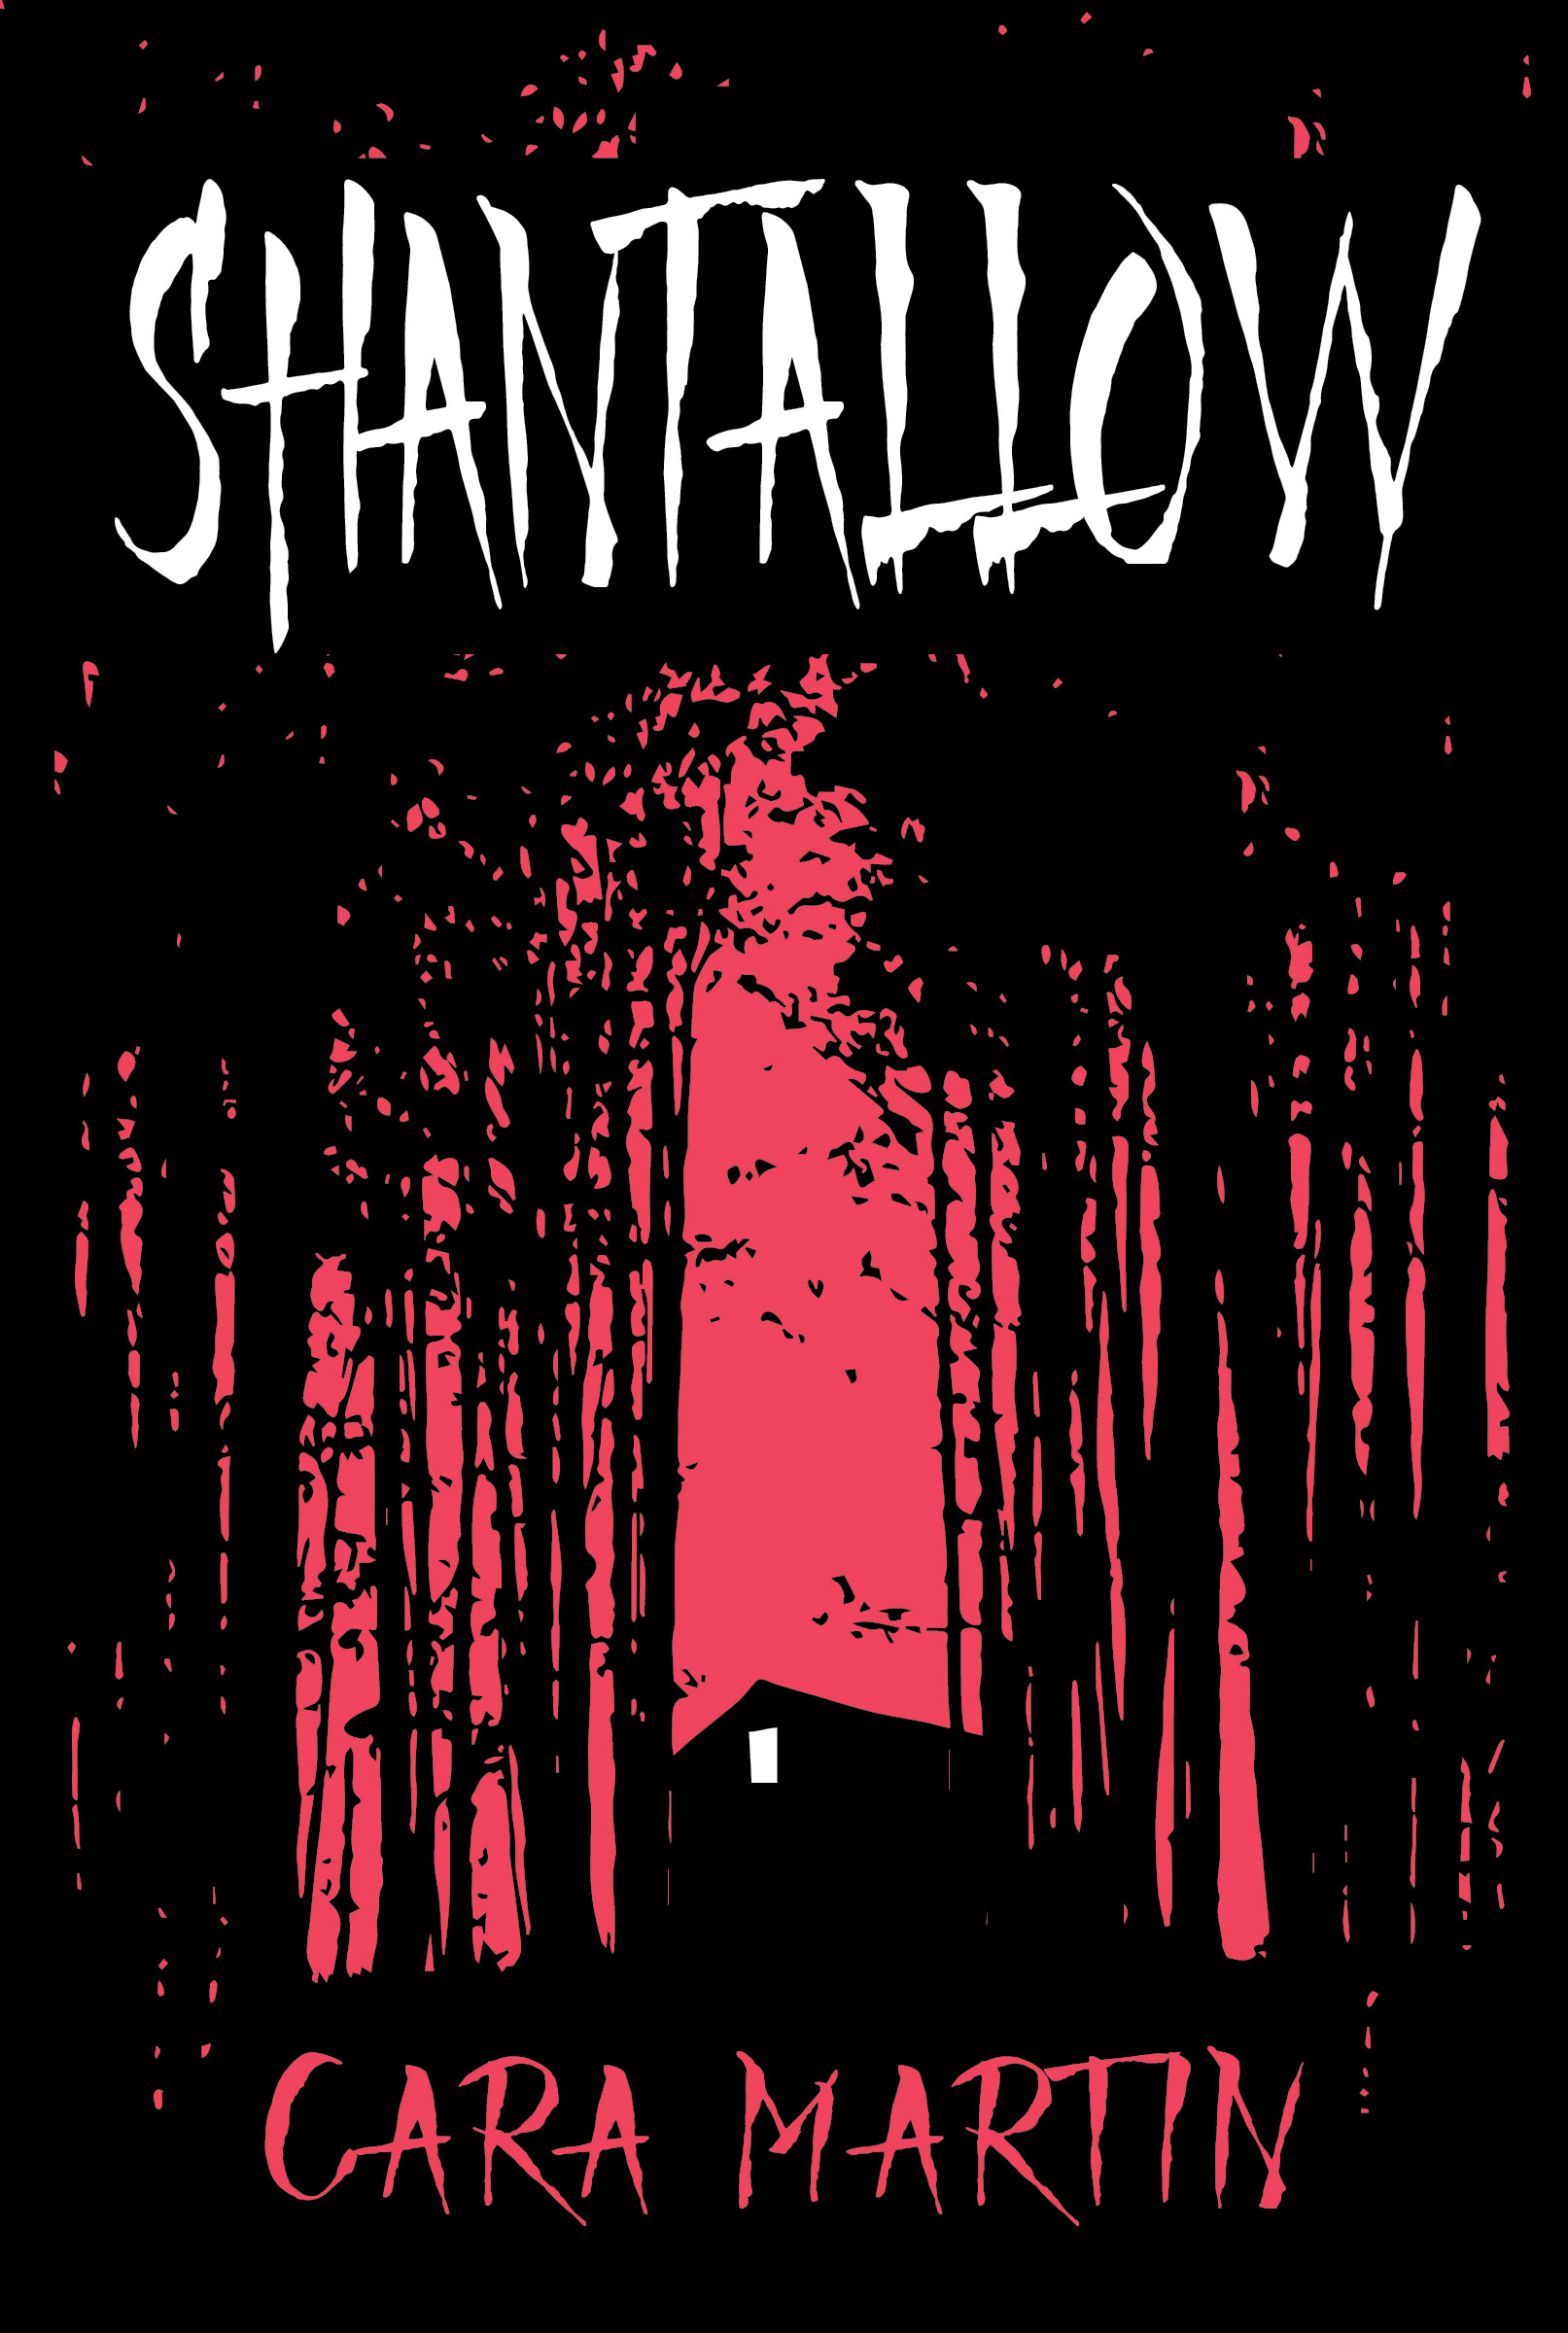 Shantallow by Cara Martin